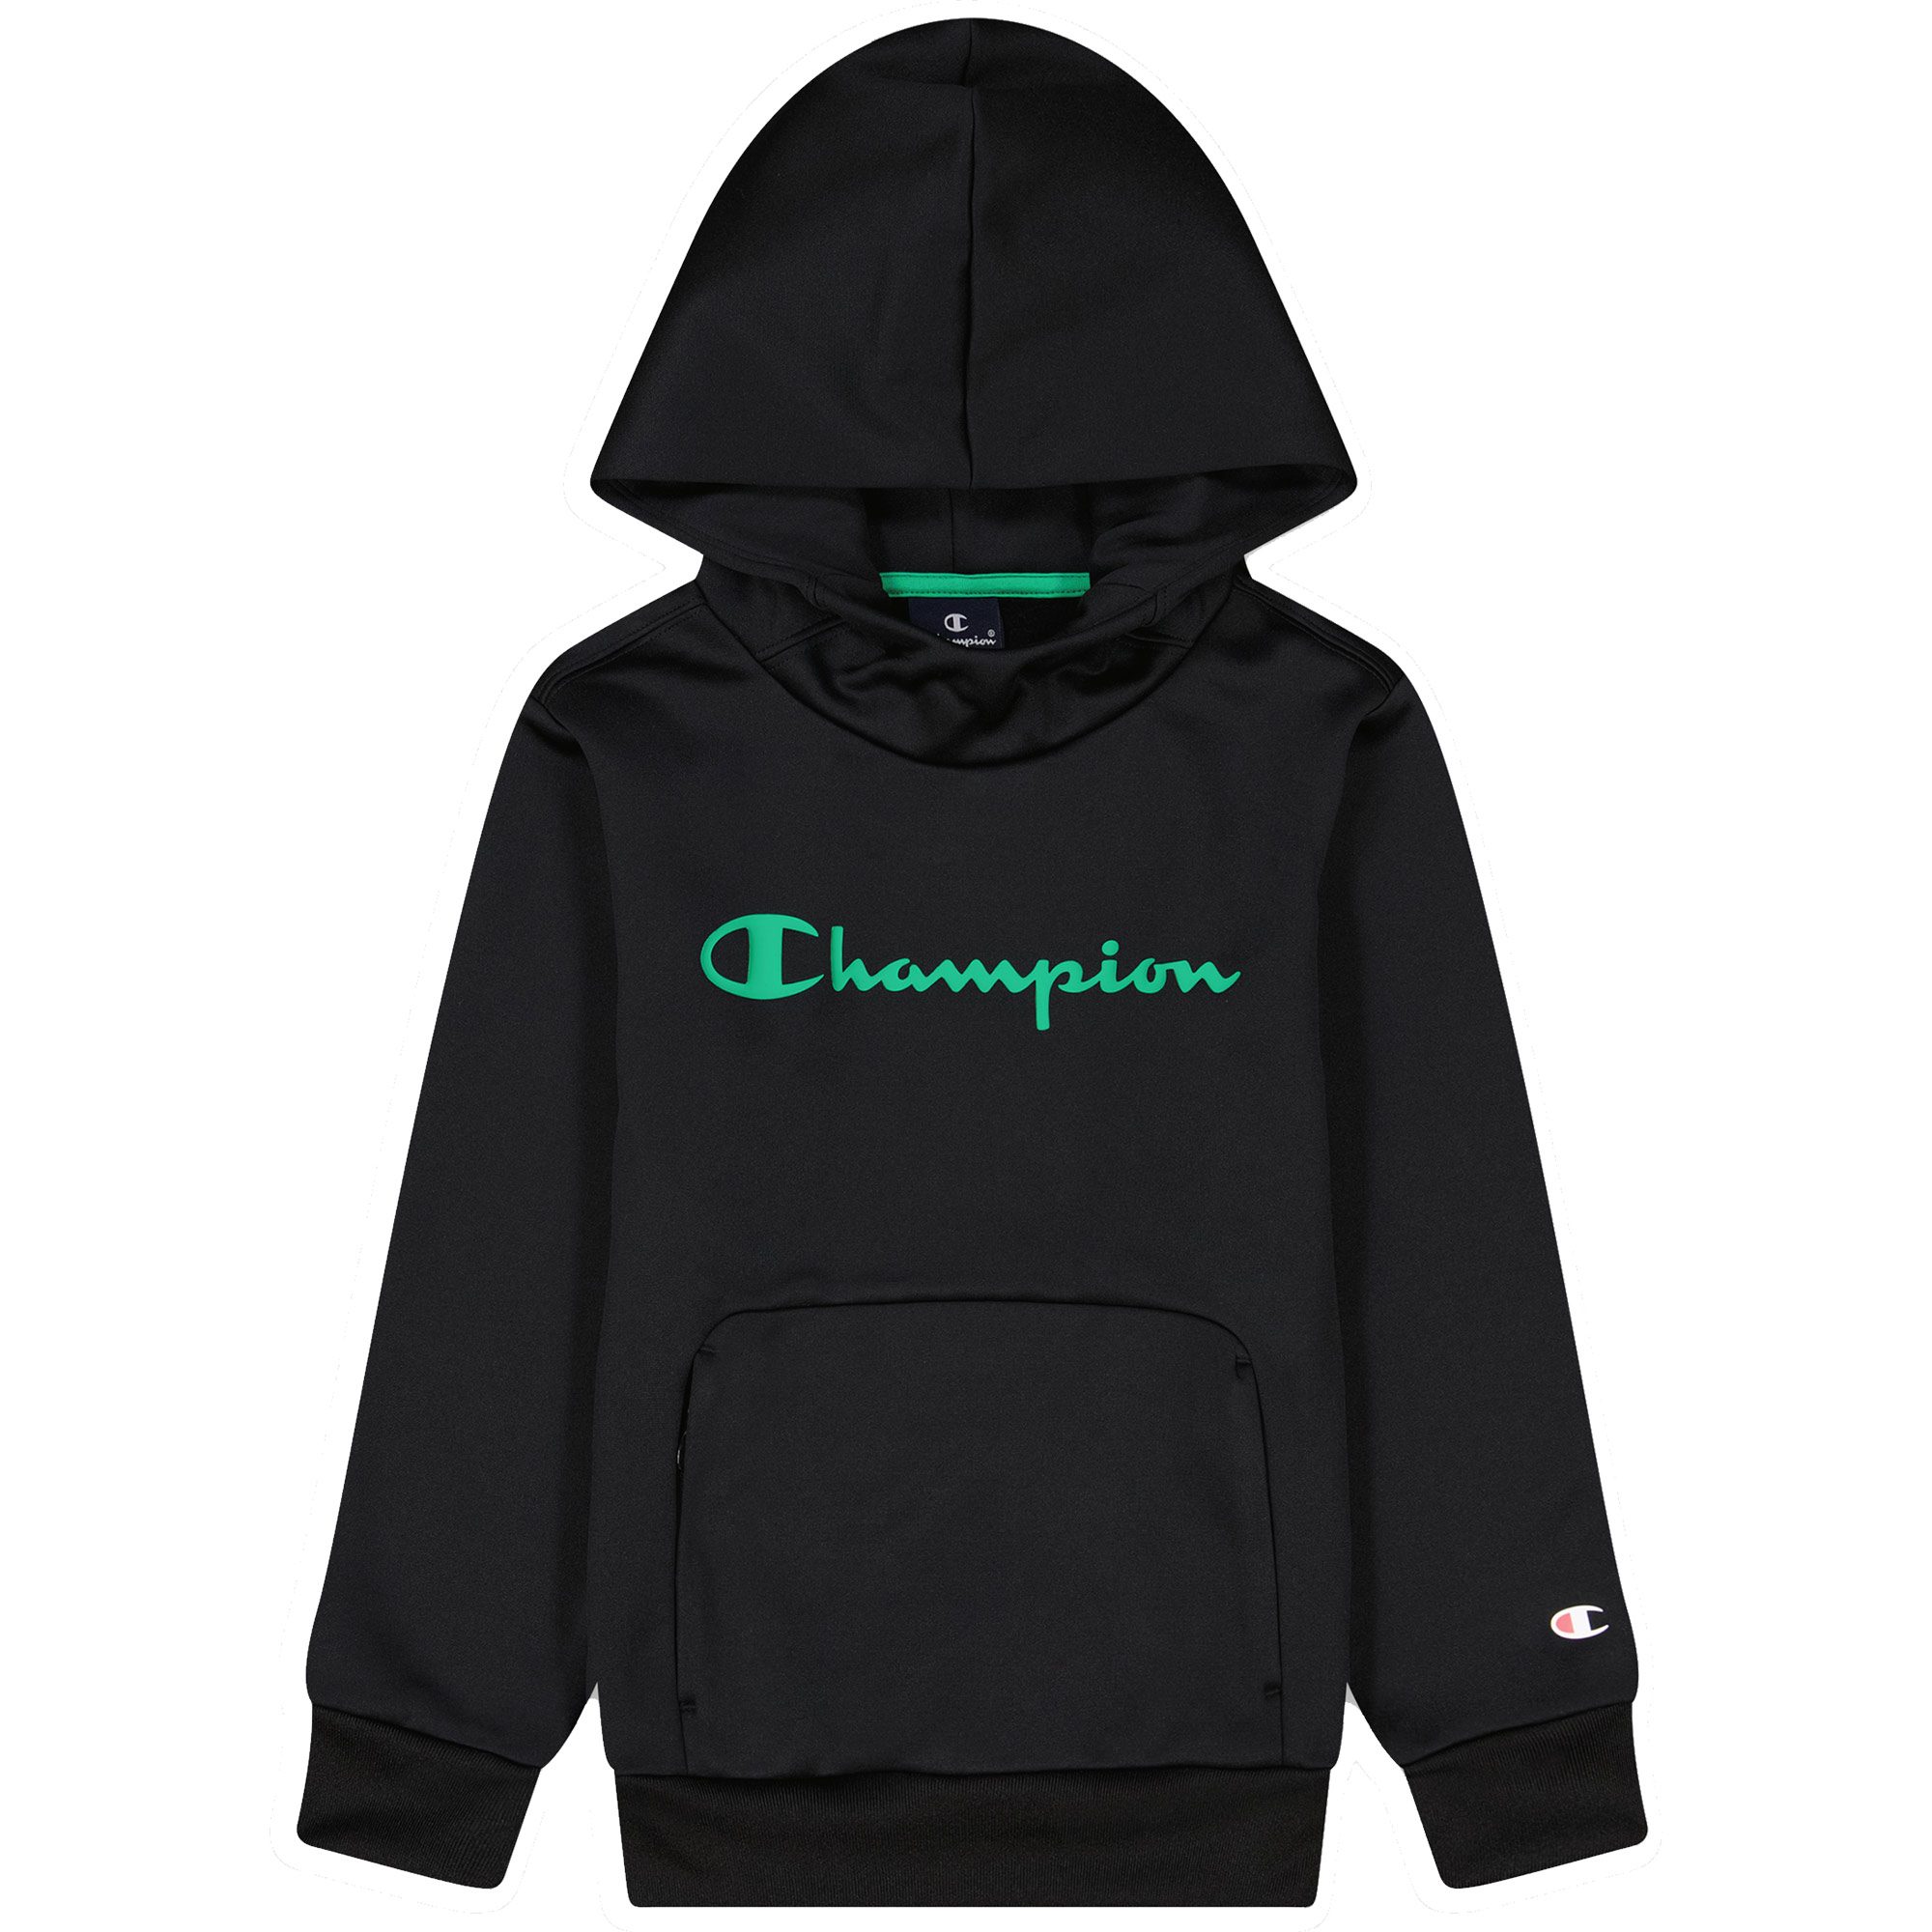 Shop Bittl Sweatshirt Sport Champion - Boys black Hooded beauty at